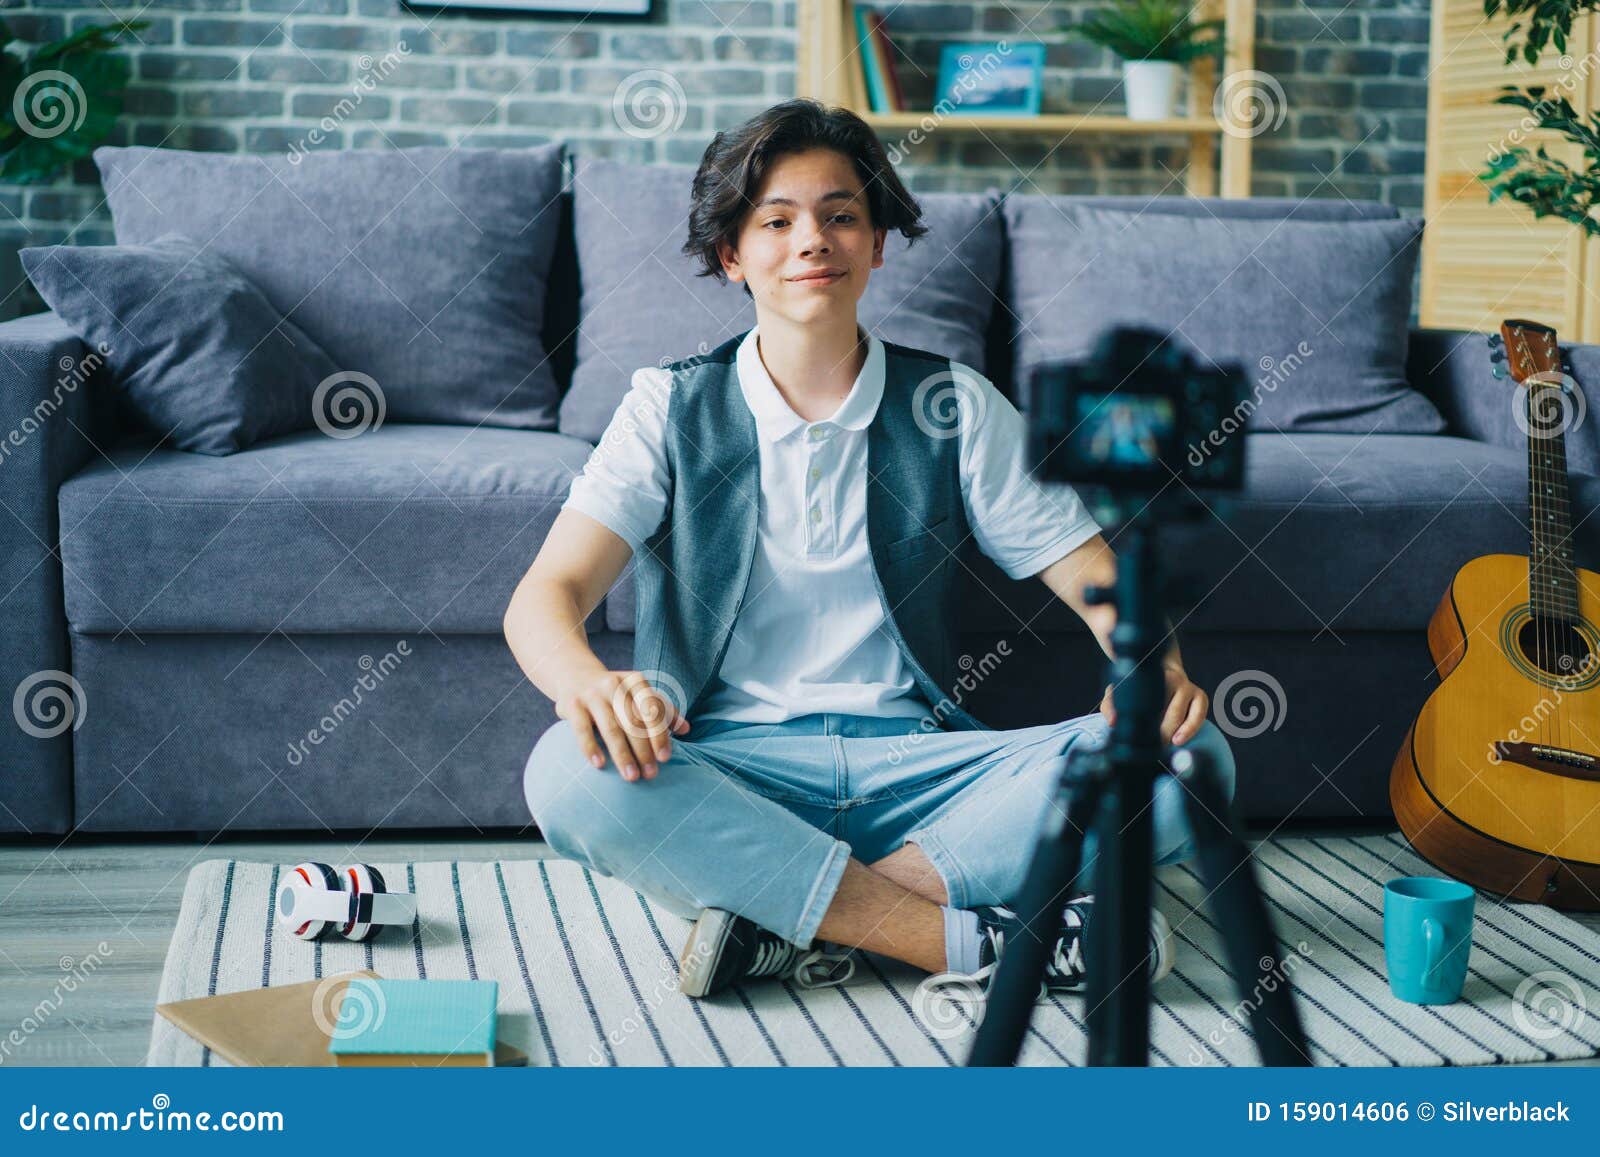 creative boy vlogger recording video for online vlog speaking on floor at home